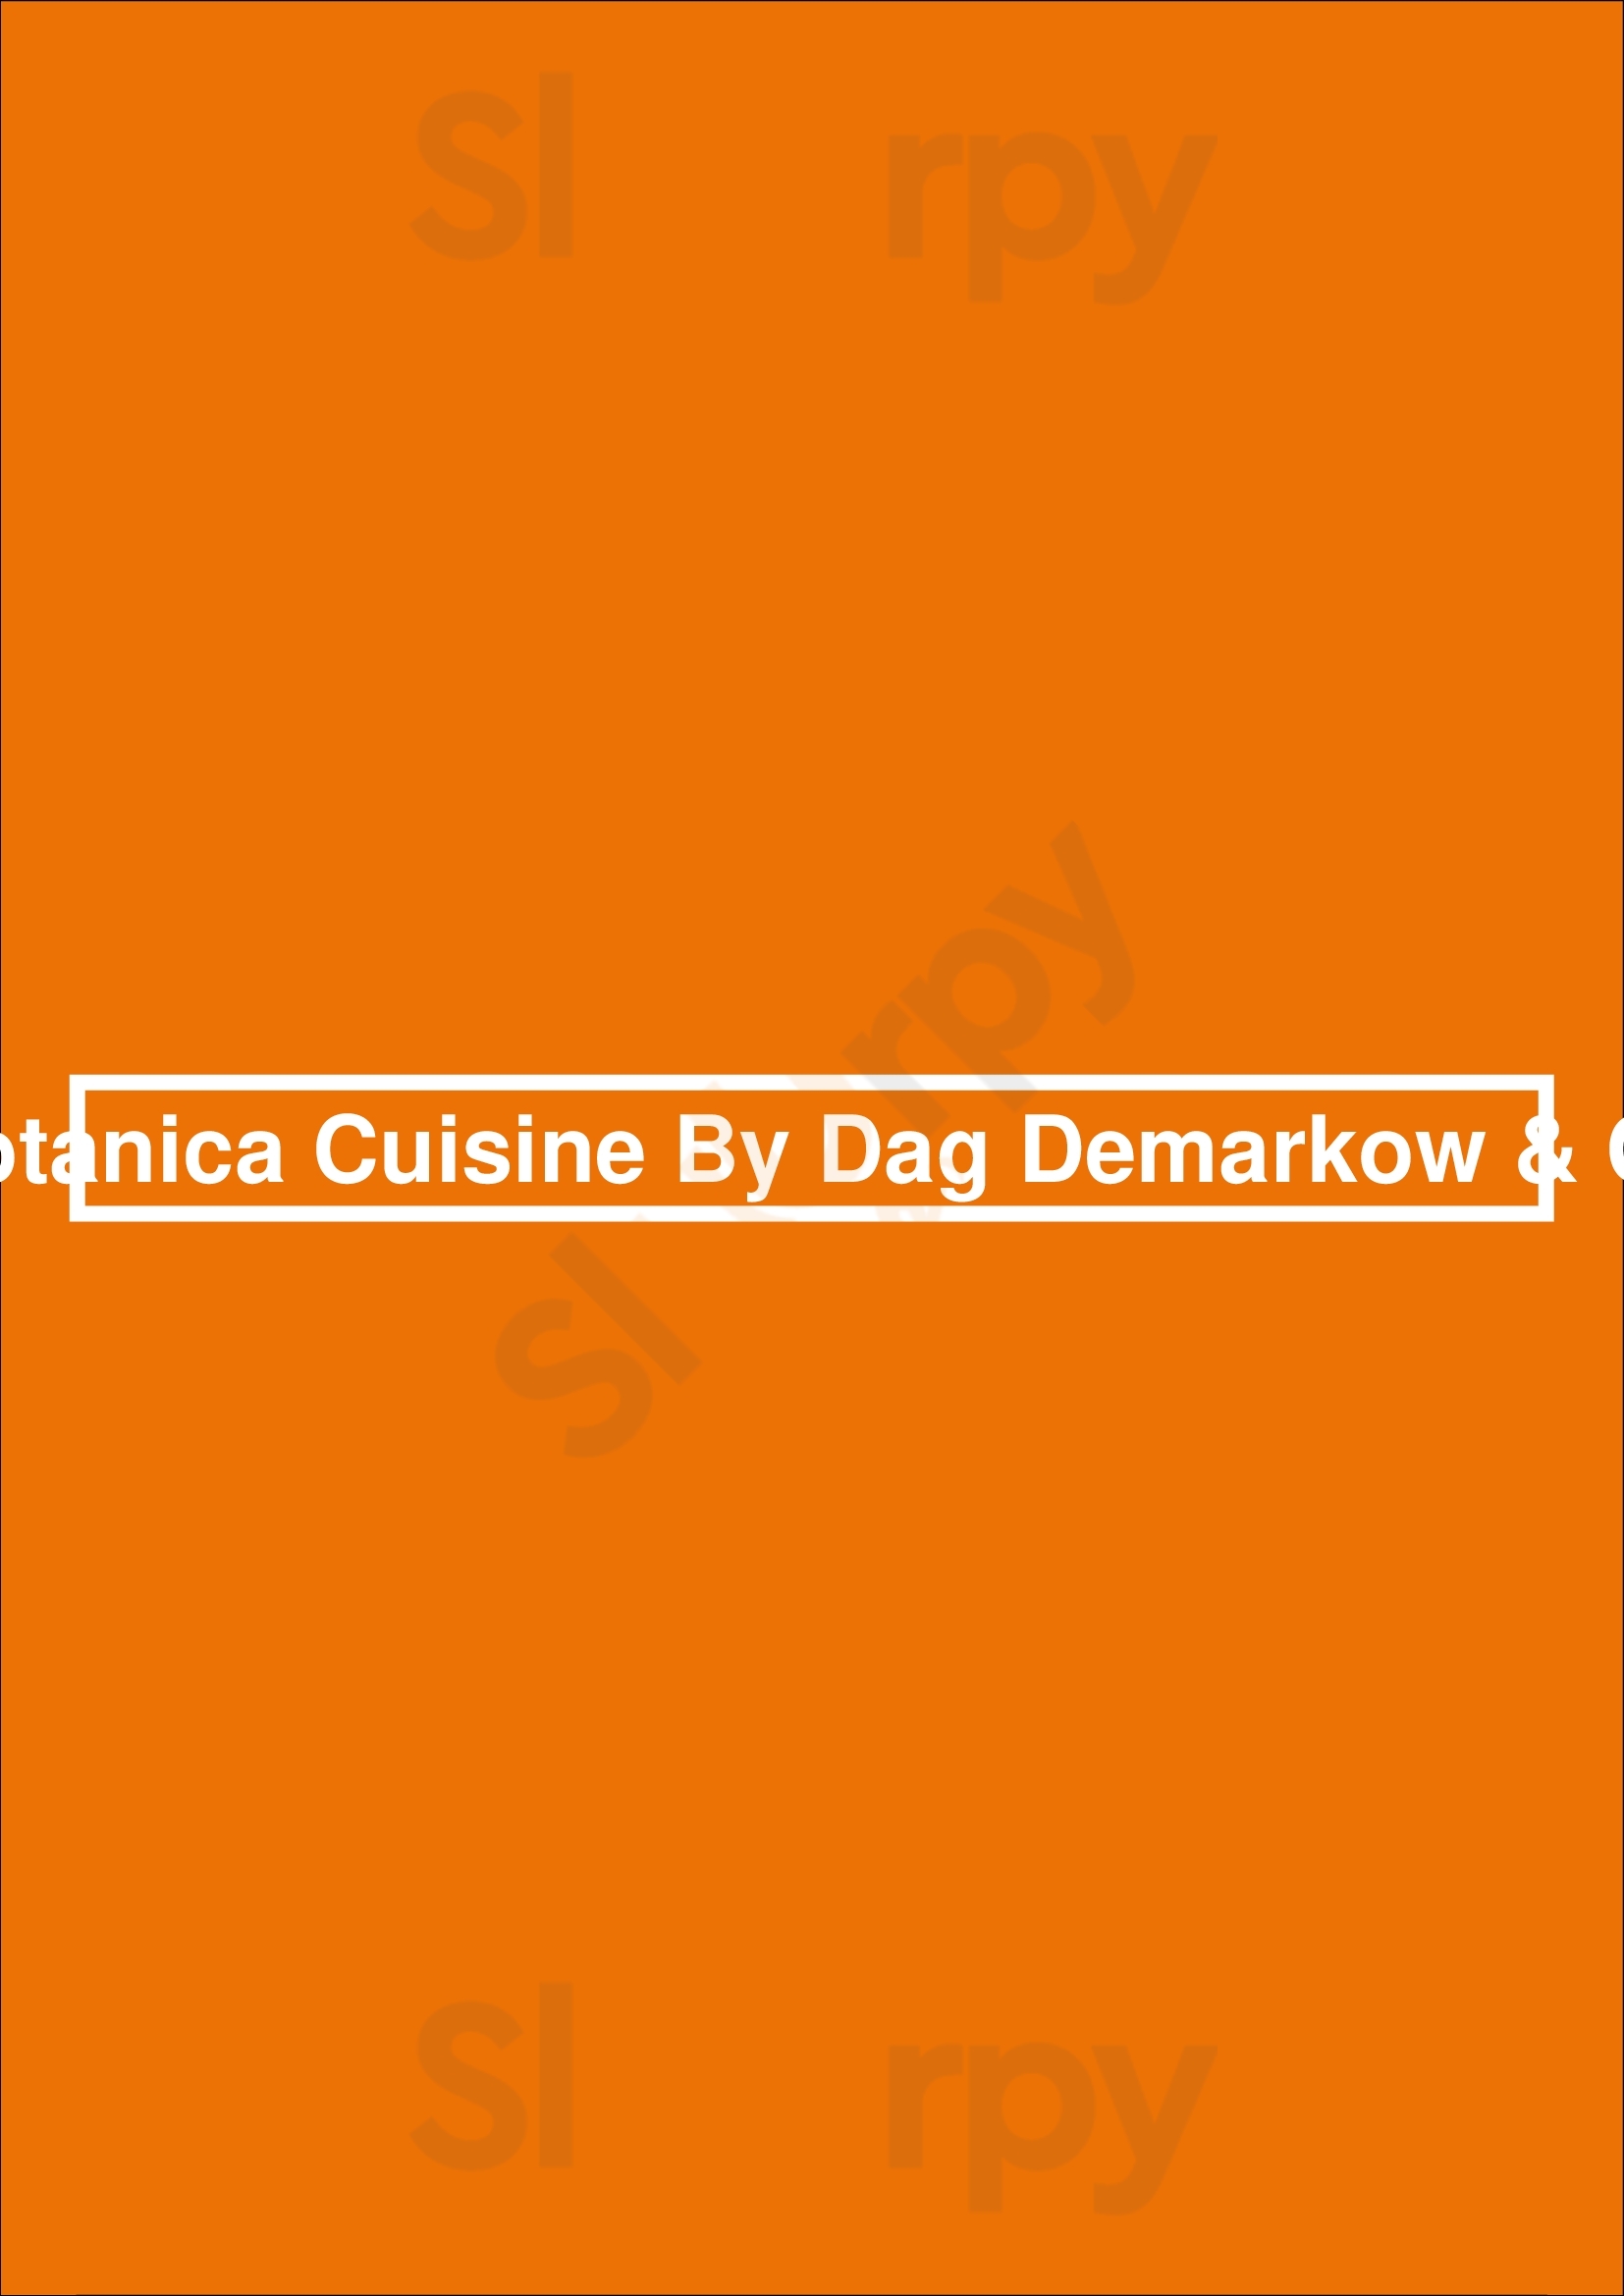 Botanica Cuisine By Dag Demarkow & Co Mildura Menu - 1